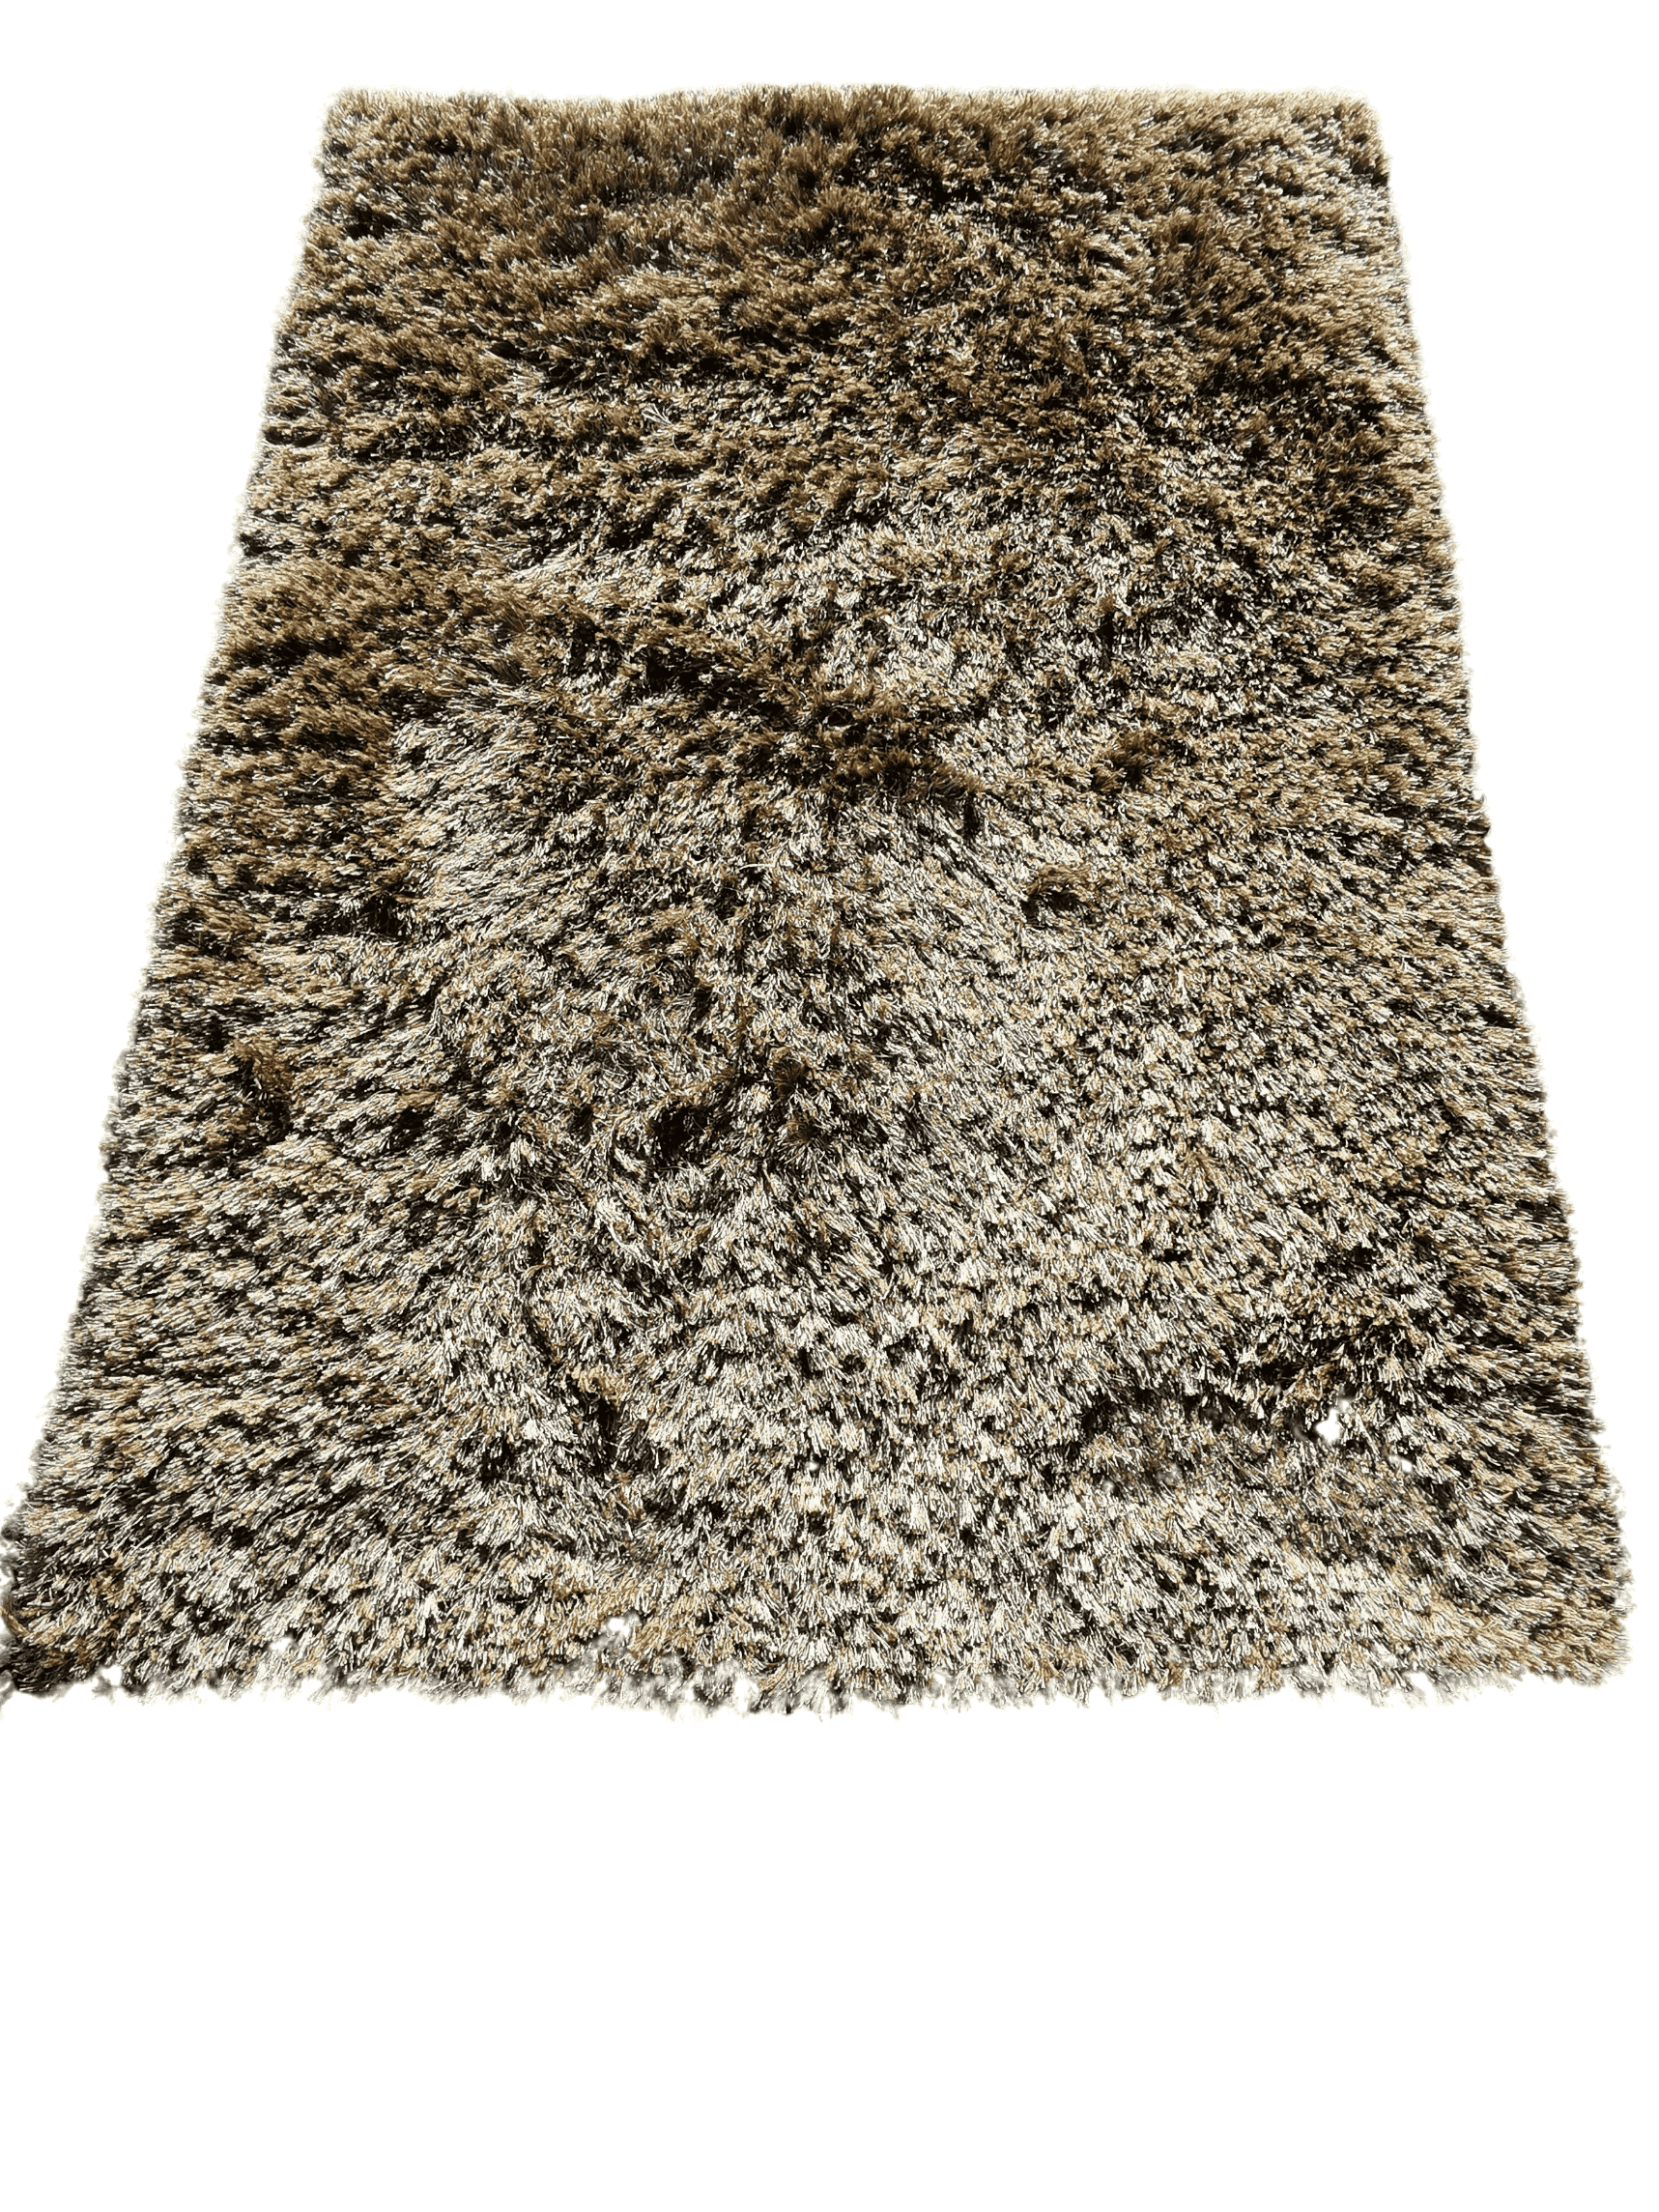 185 x 125 cm modern shaggy silk effect Modern Brown Rug - Rugmaster